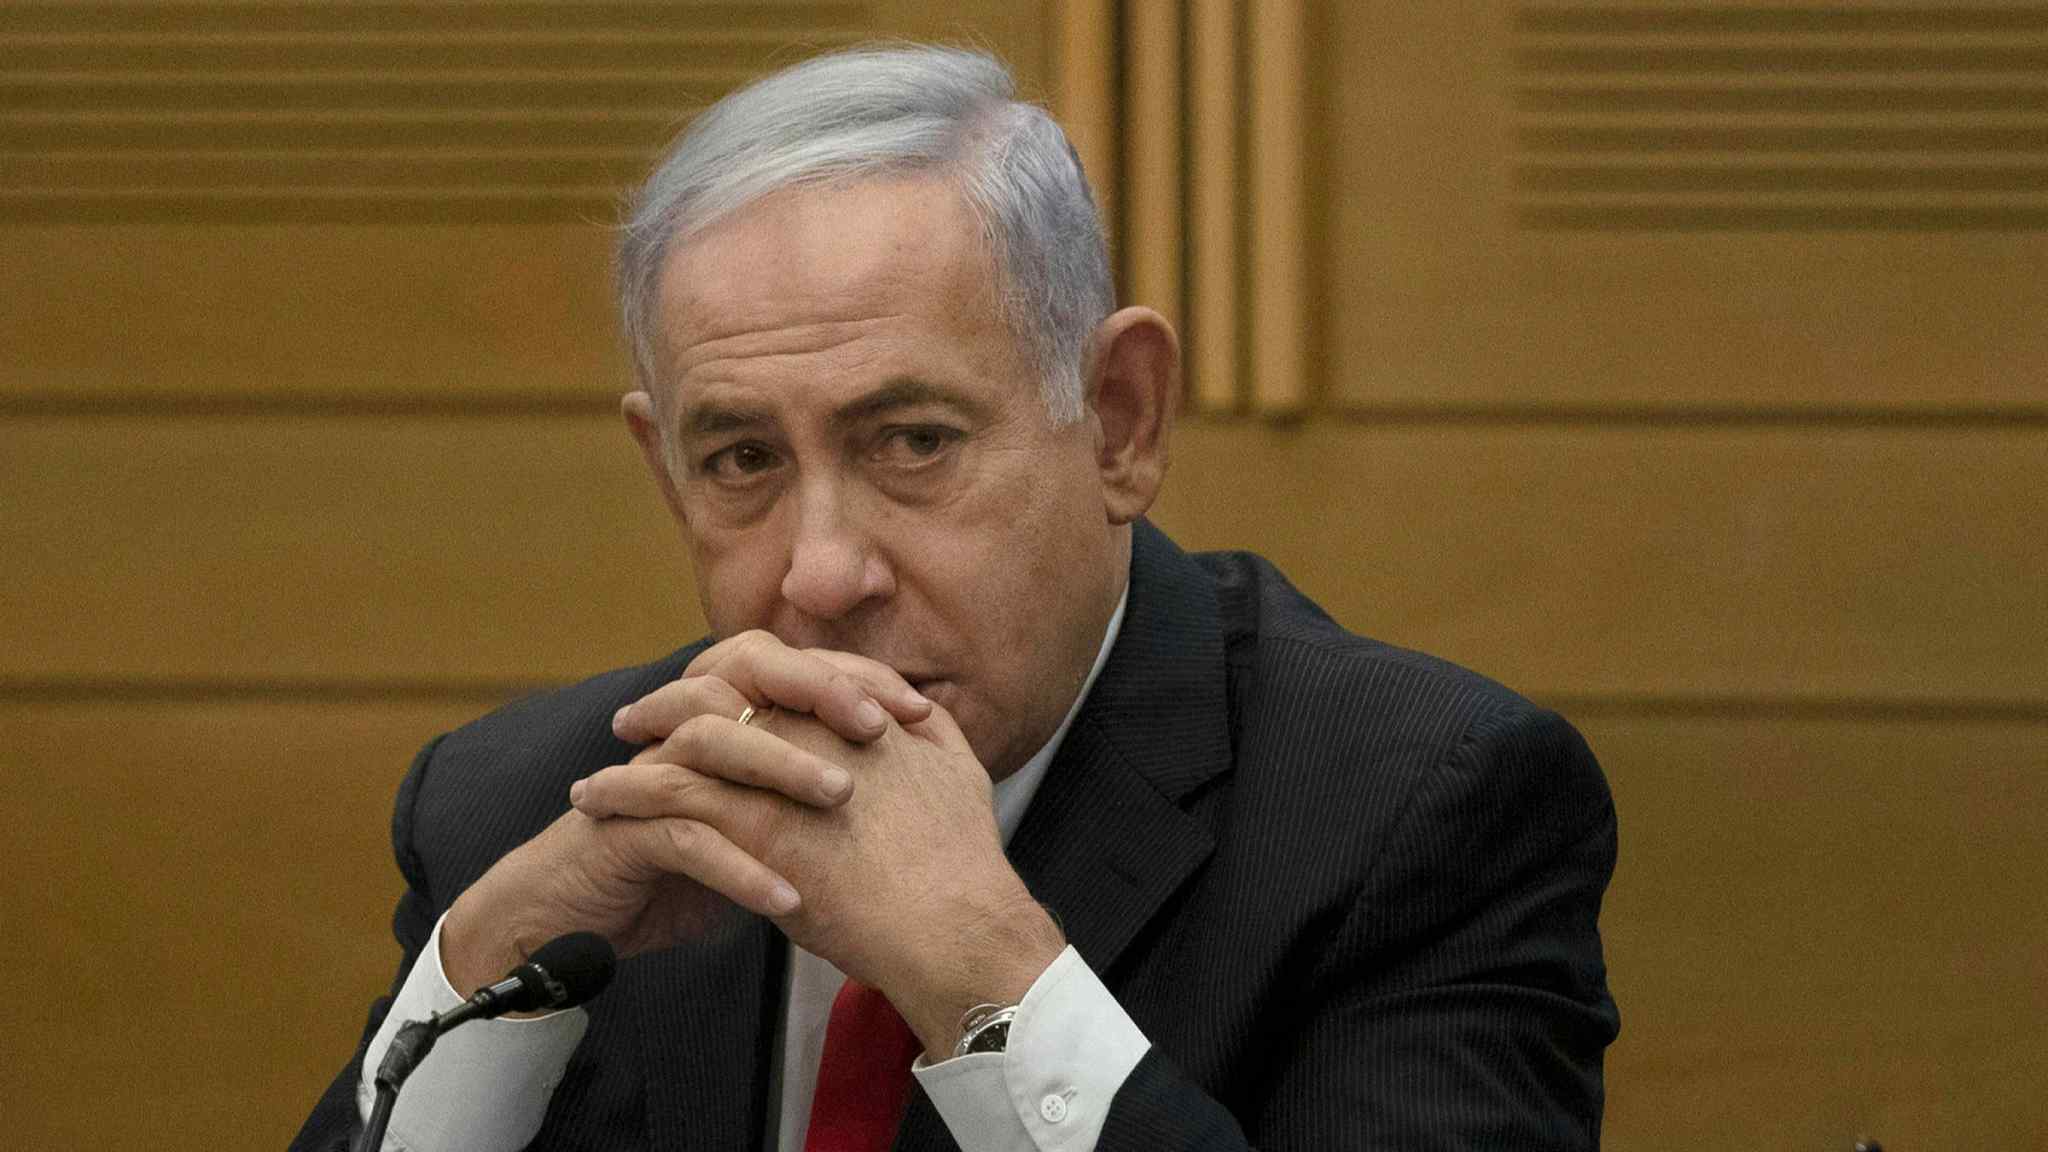 Netanyahu seeks plea-deal avoiding jail time but risking political exile 